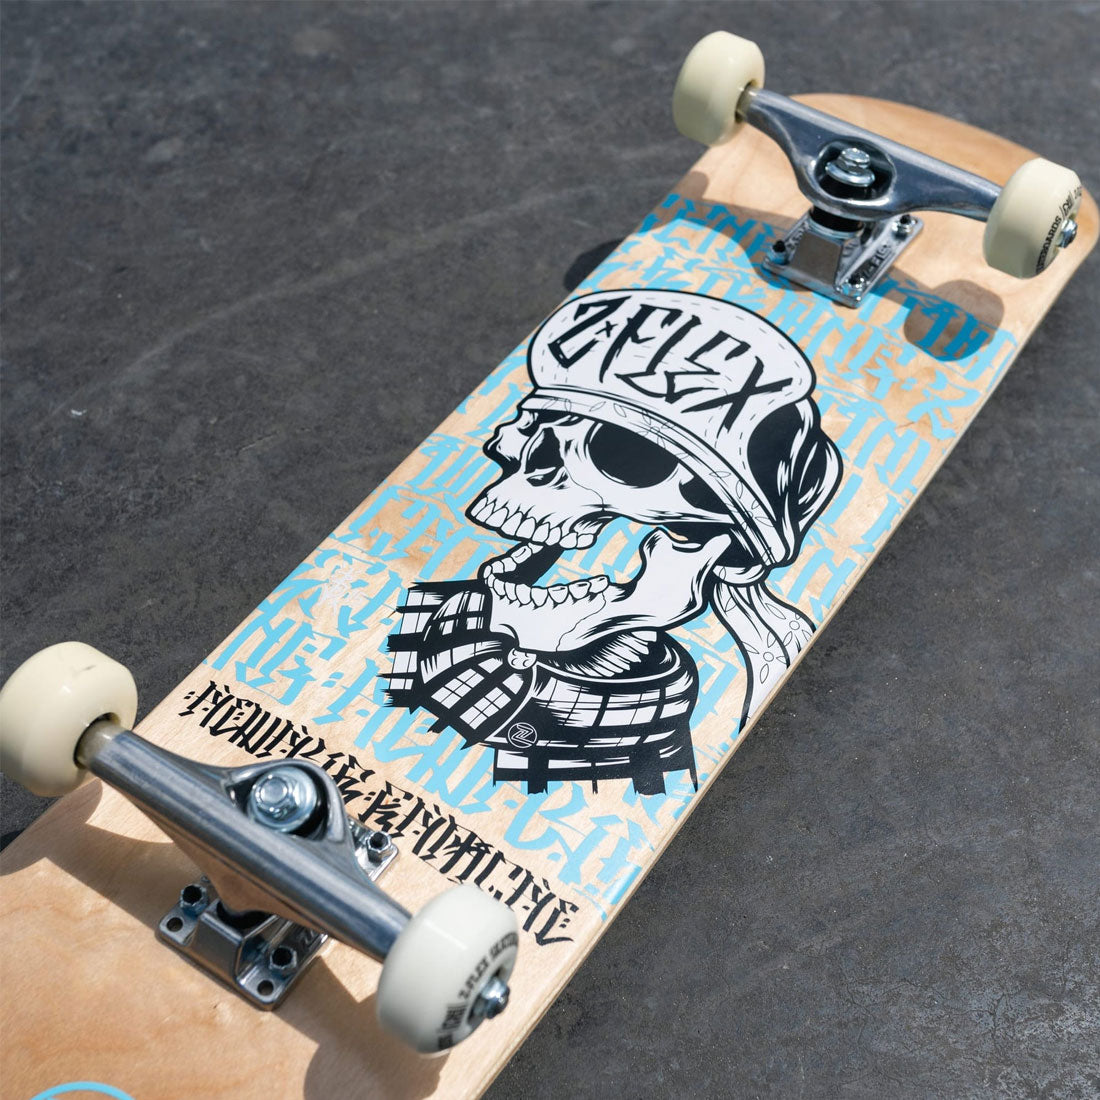 Z-Flex Skull 8.0 Complete Skateboard Completes Modern Street